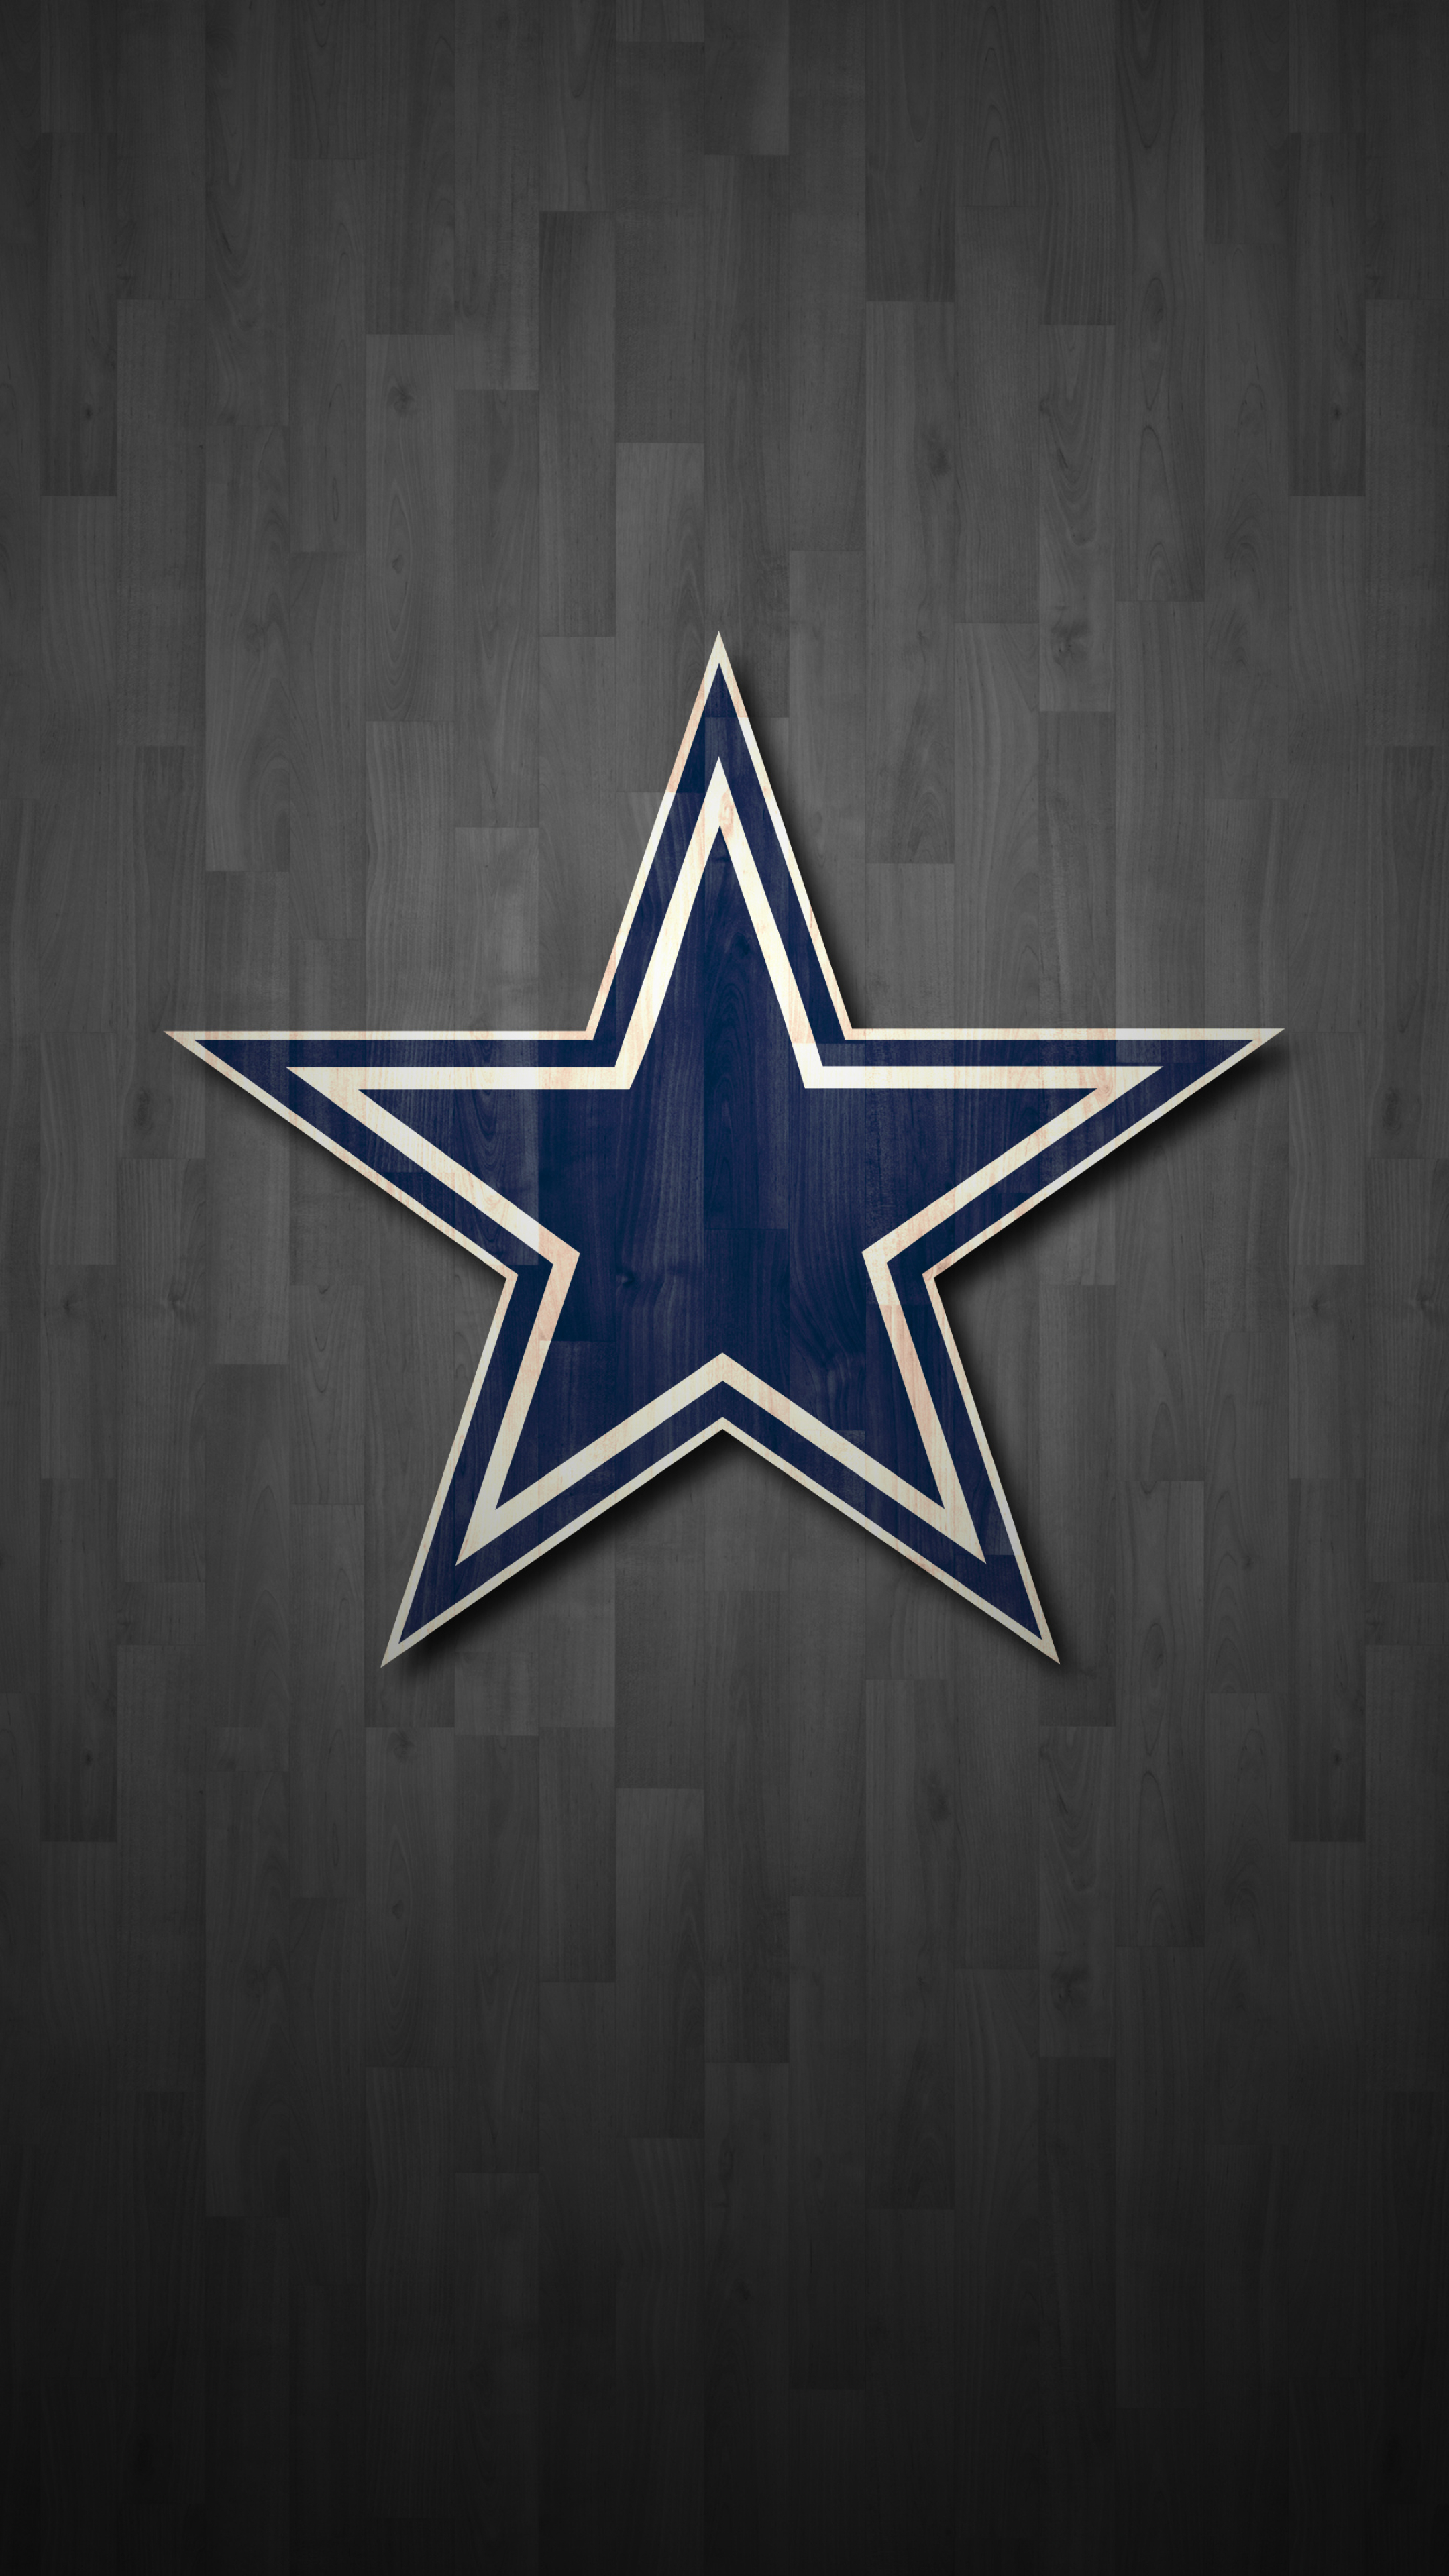 Dallas Cowboys: A professional American football team based in the Dallas–Fort Worth metroplex. 2160x3840 4K Wallpaper.